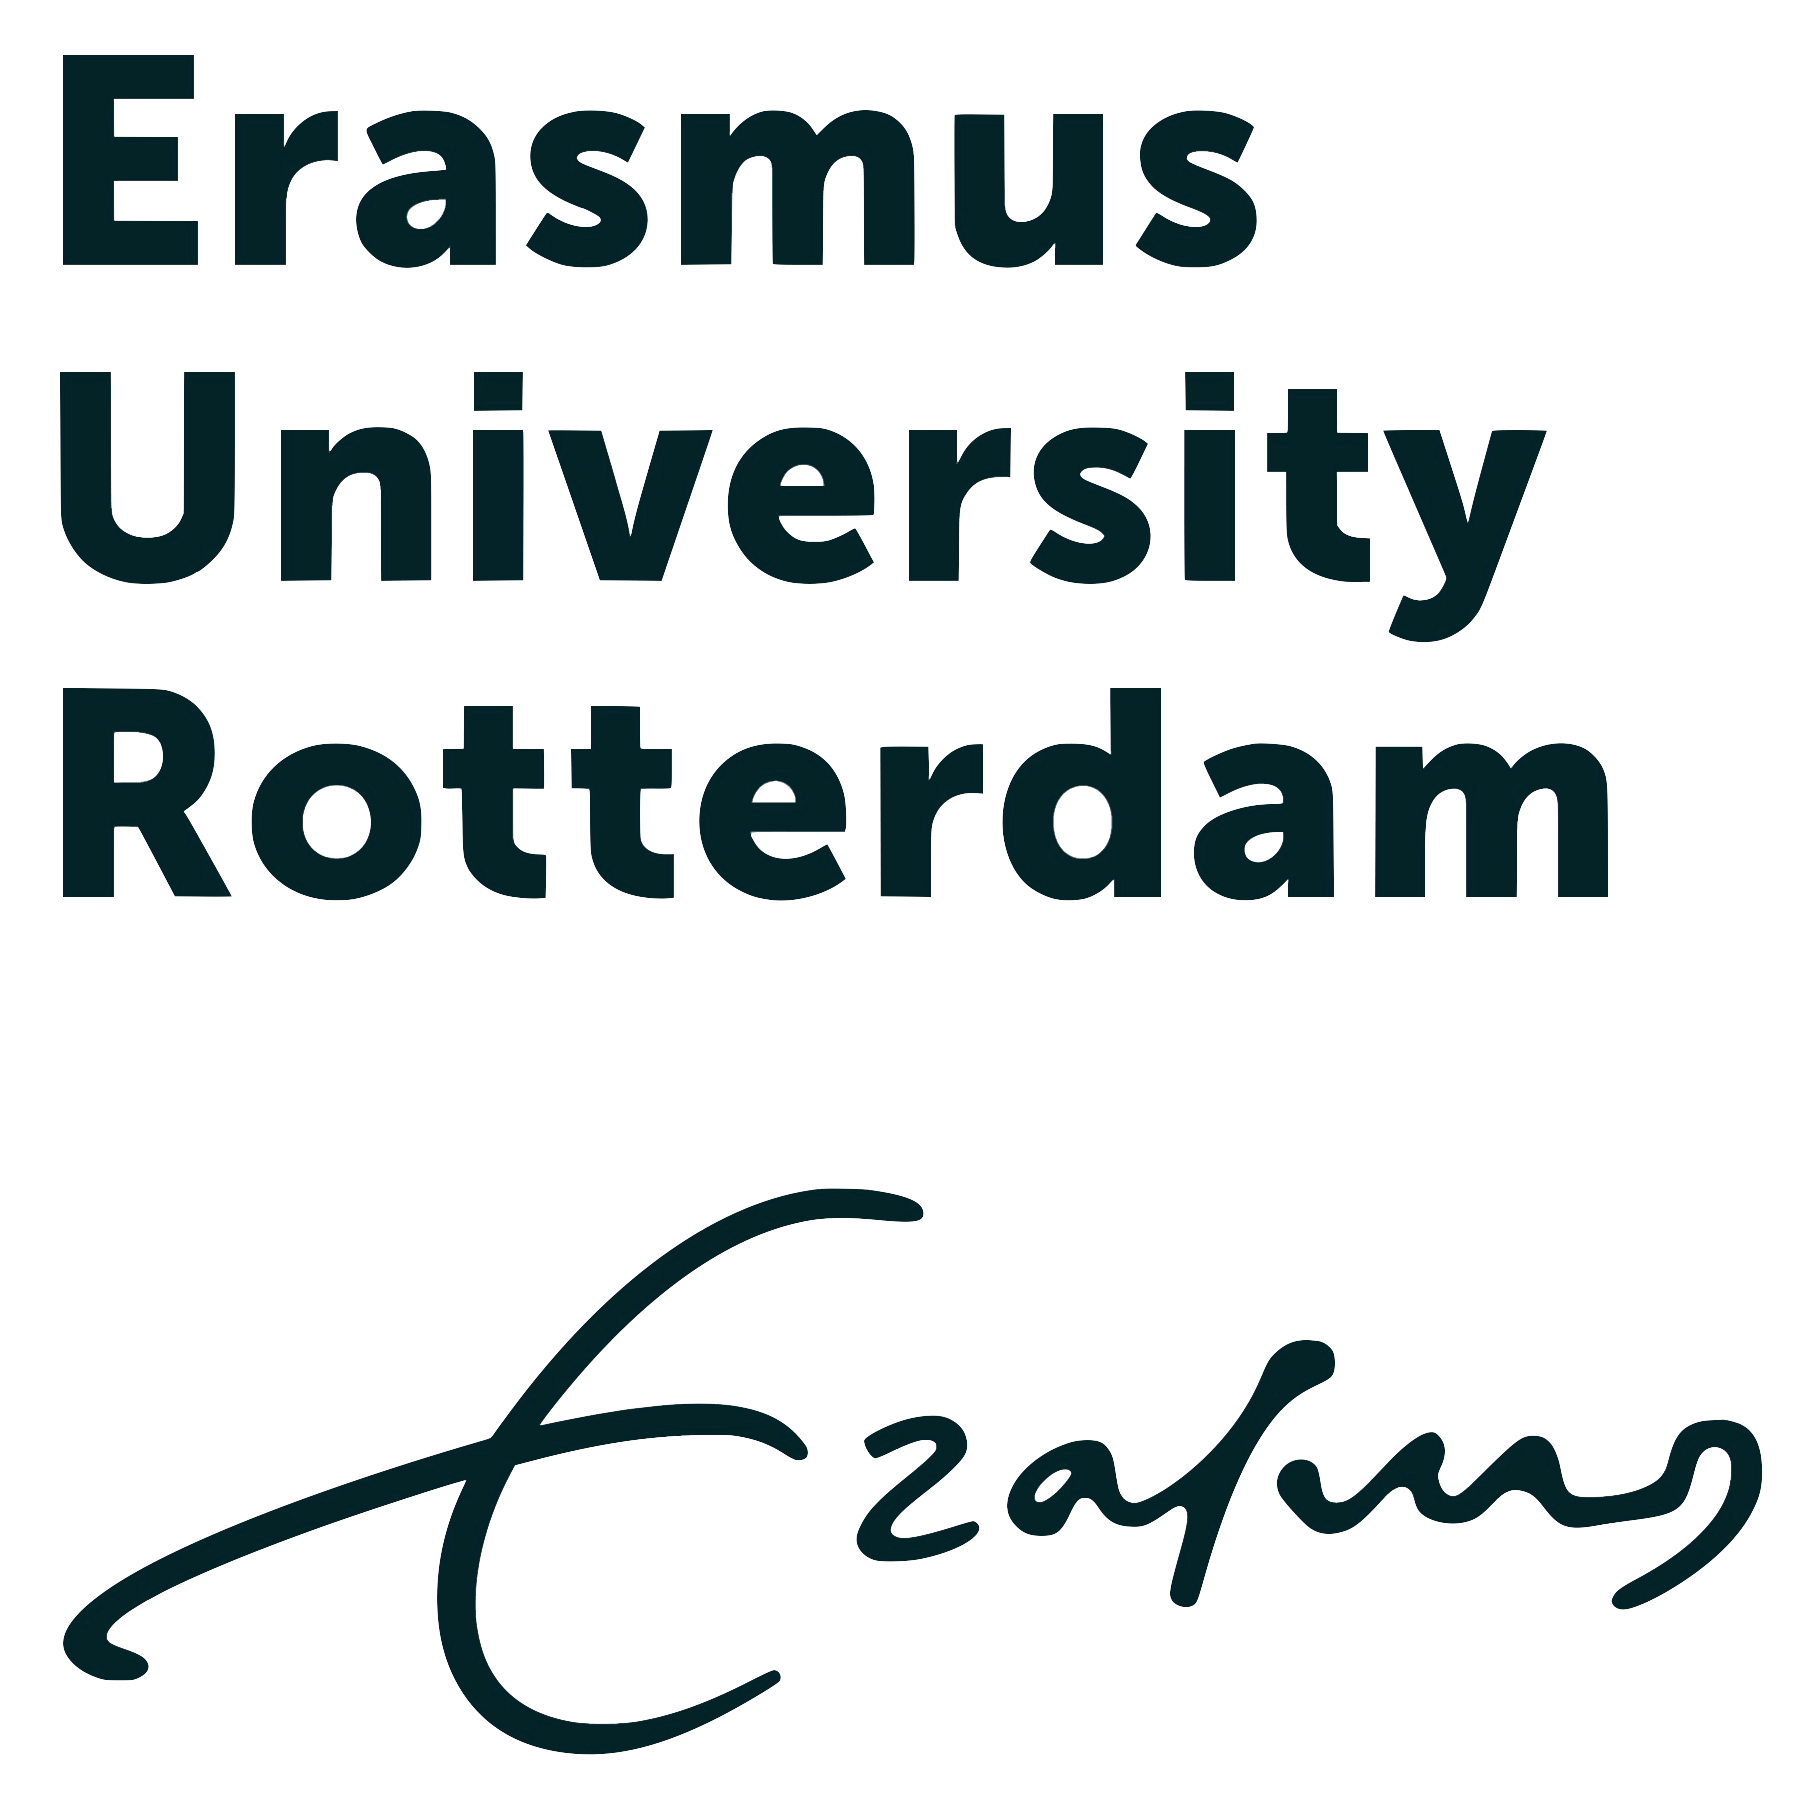 Rotterdam Logo - Erasmus University Rotterdam, Netherlands | Study.EU